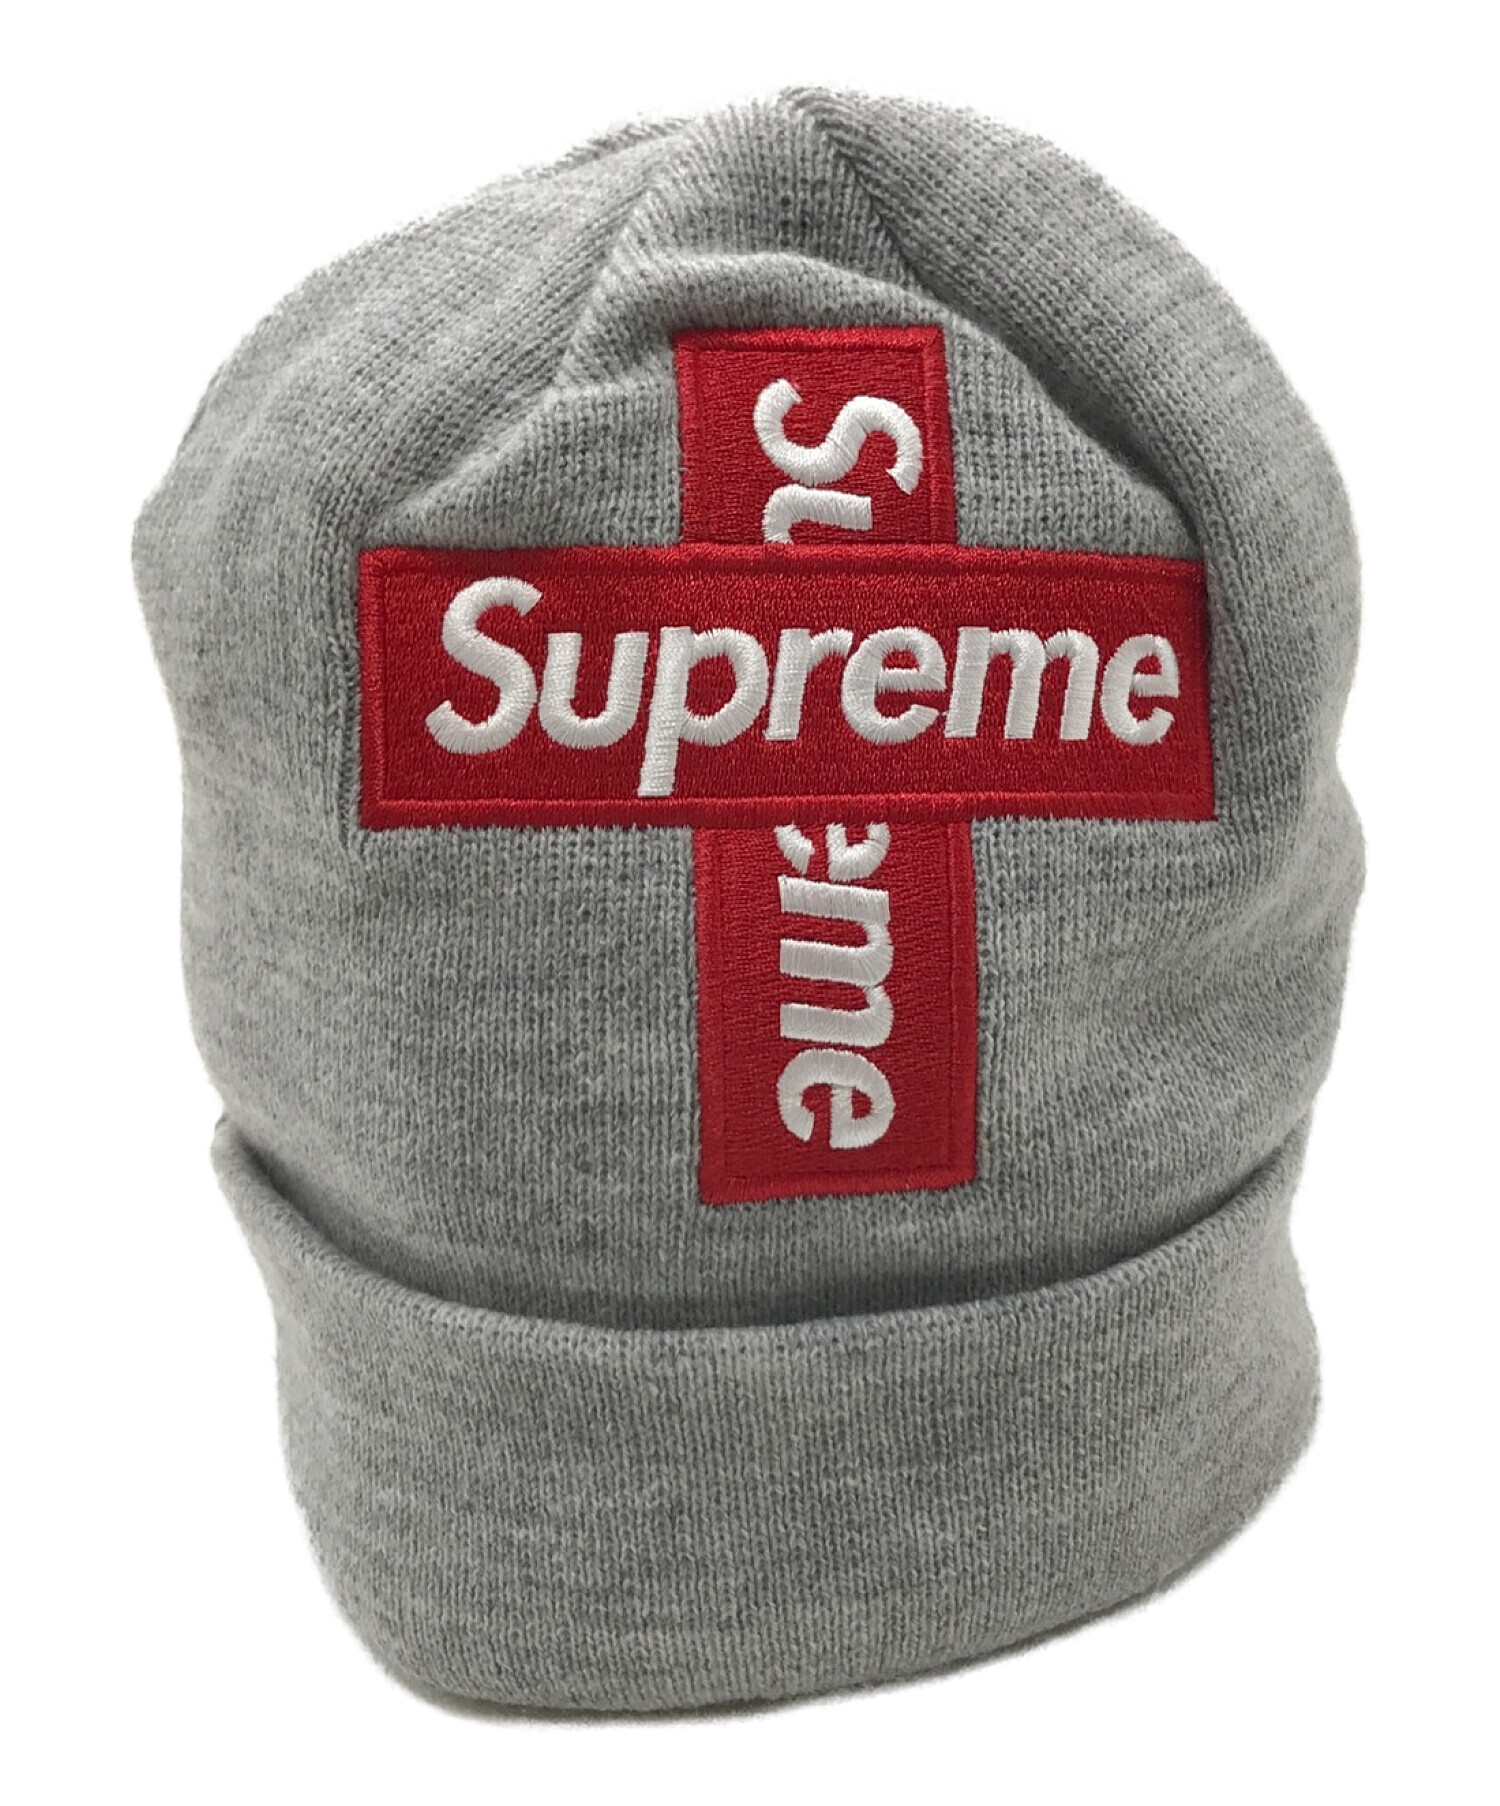 帽子New Era Supreme Cross Box Logo Beanie